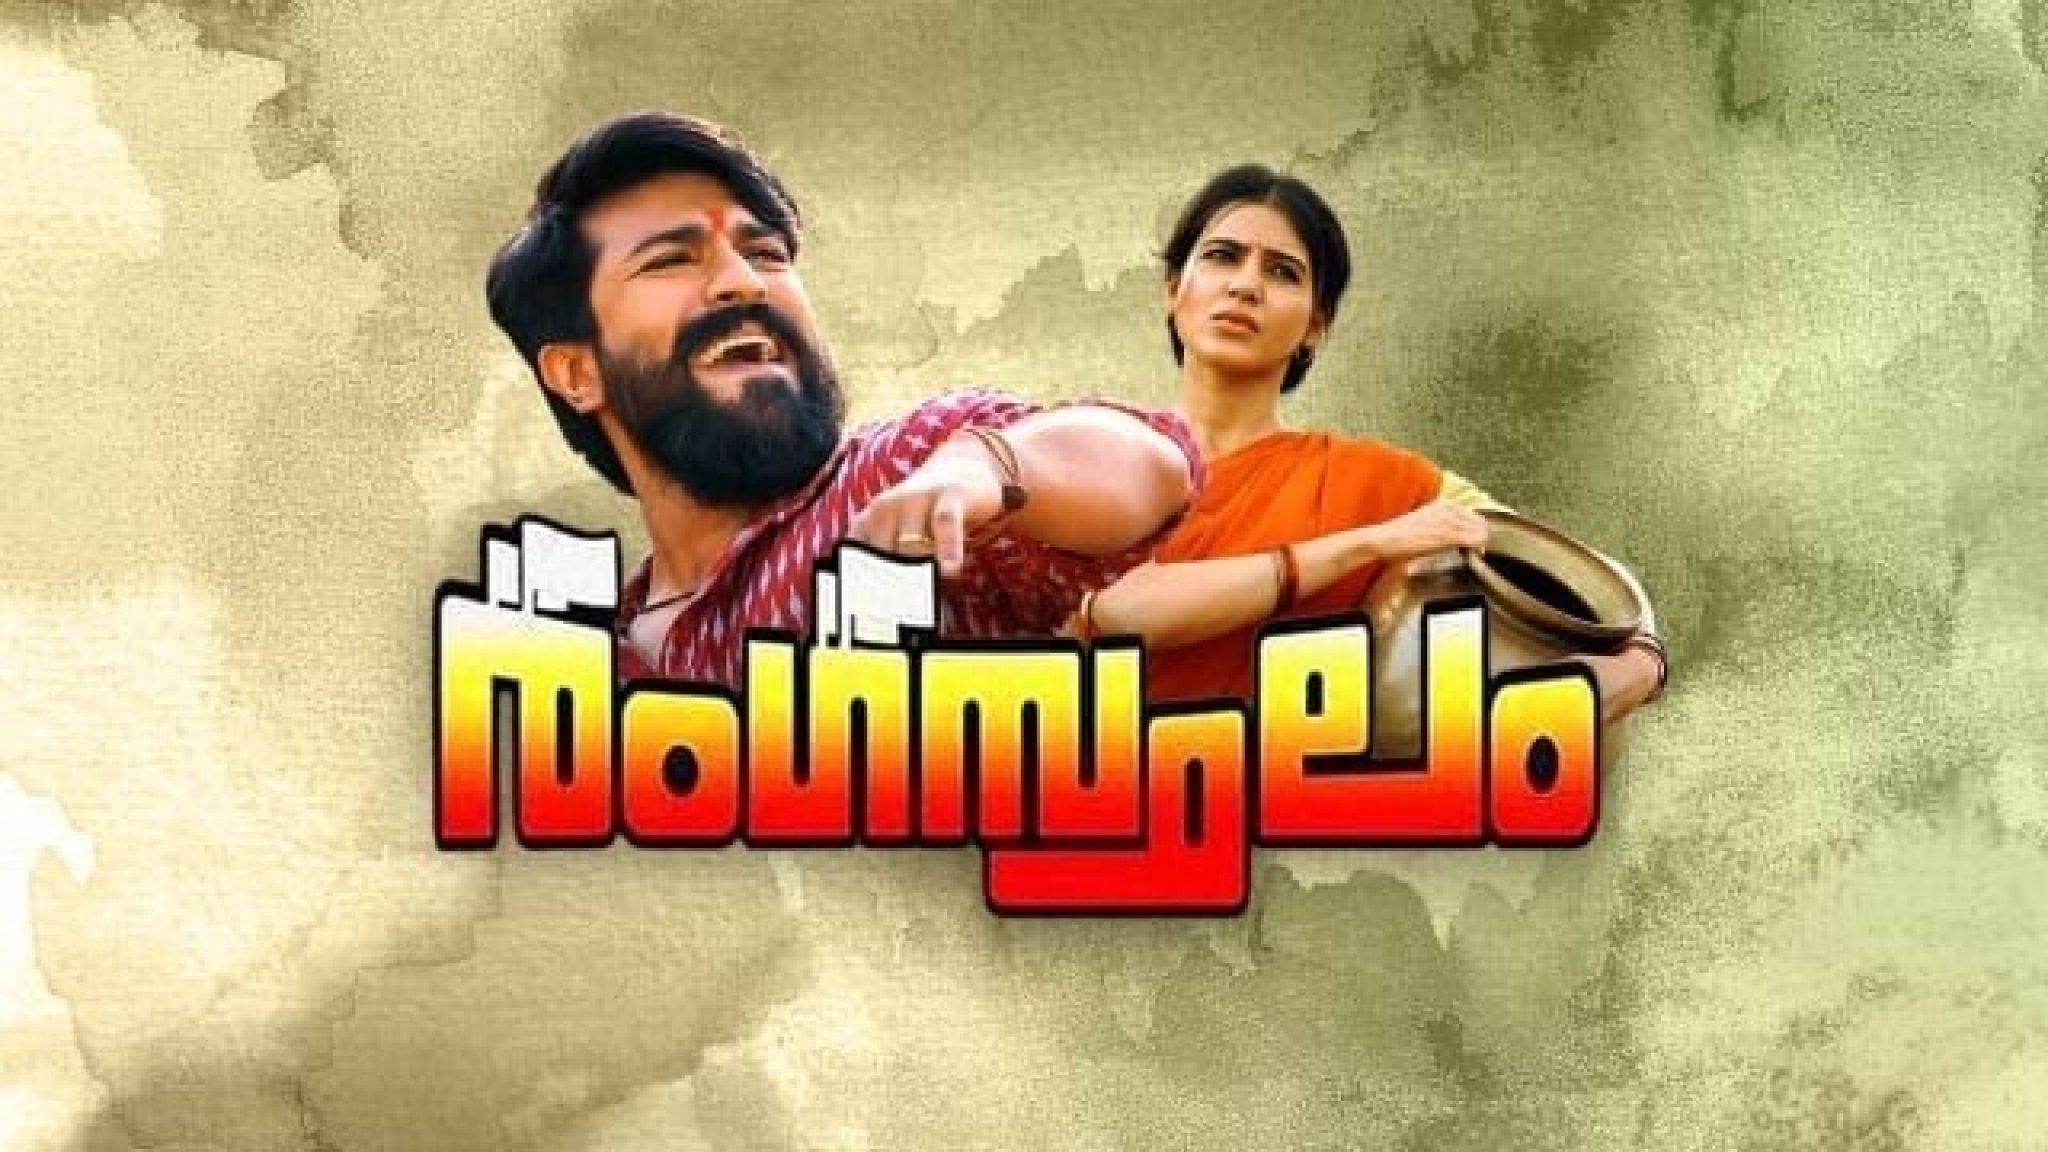 Top 18 Telugu Movies On Amazon Prime Compare Prices